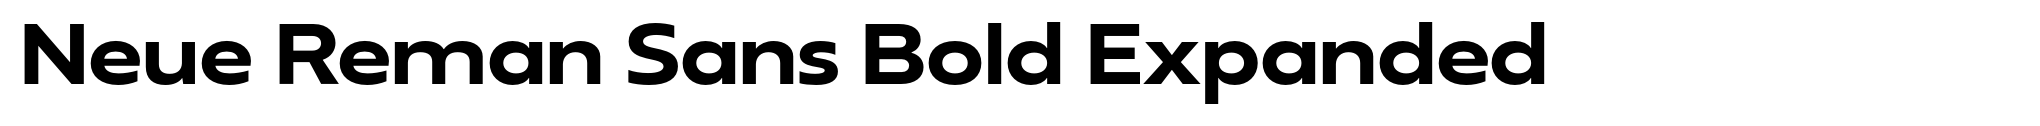 Neue Reman Sans Bold Expanded image